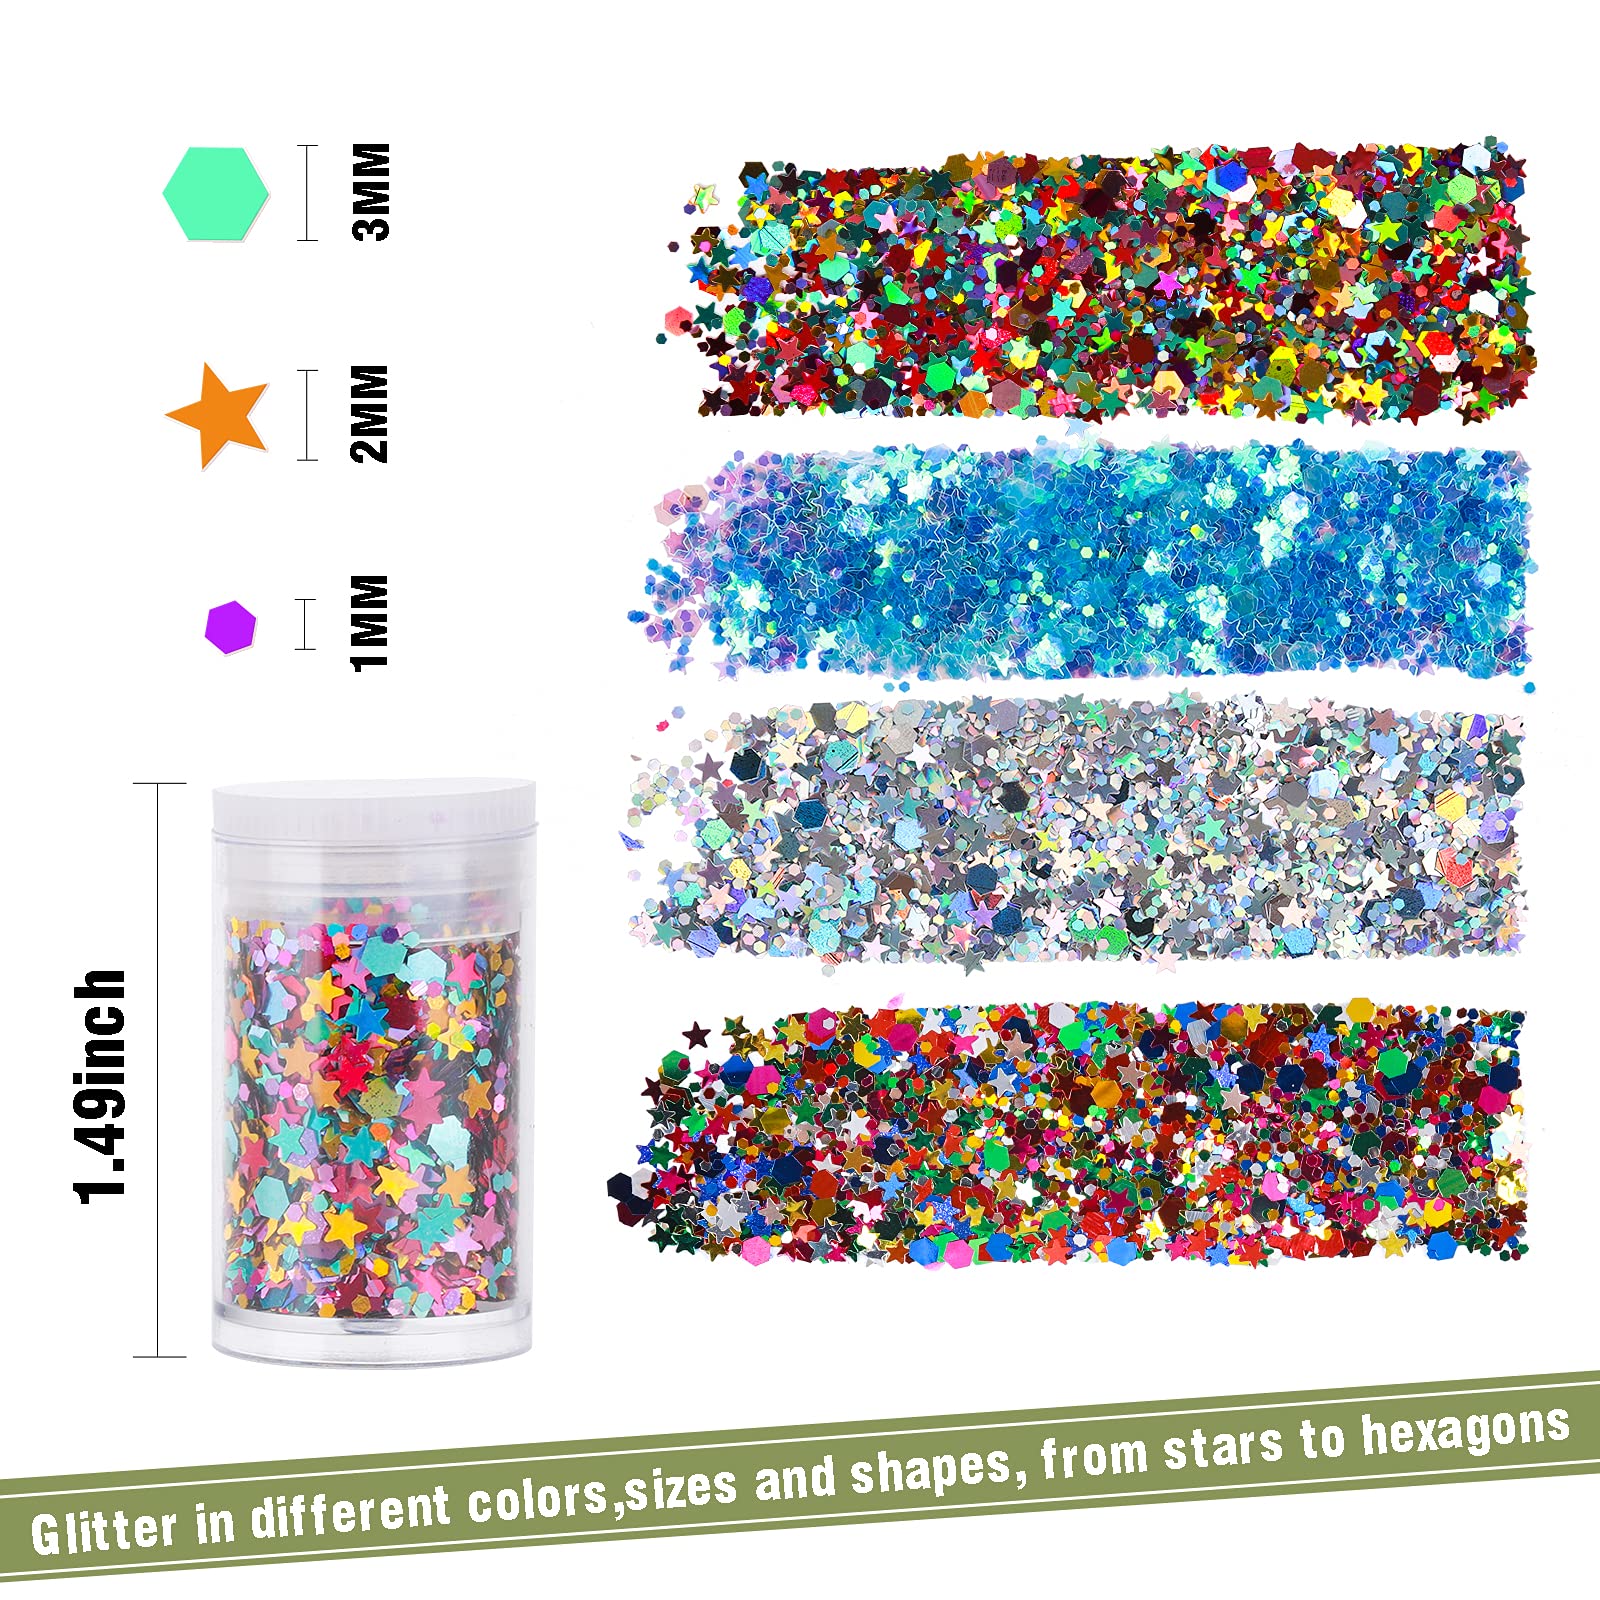 Teenitor Glitter, Chunky Glitter Mixed, Nail Glitter with Stars, Cosmetic Face Body Eye Hair Glitter, 32pcs